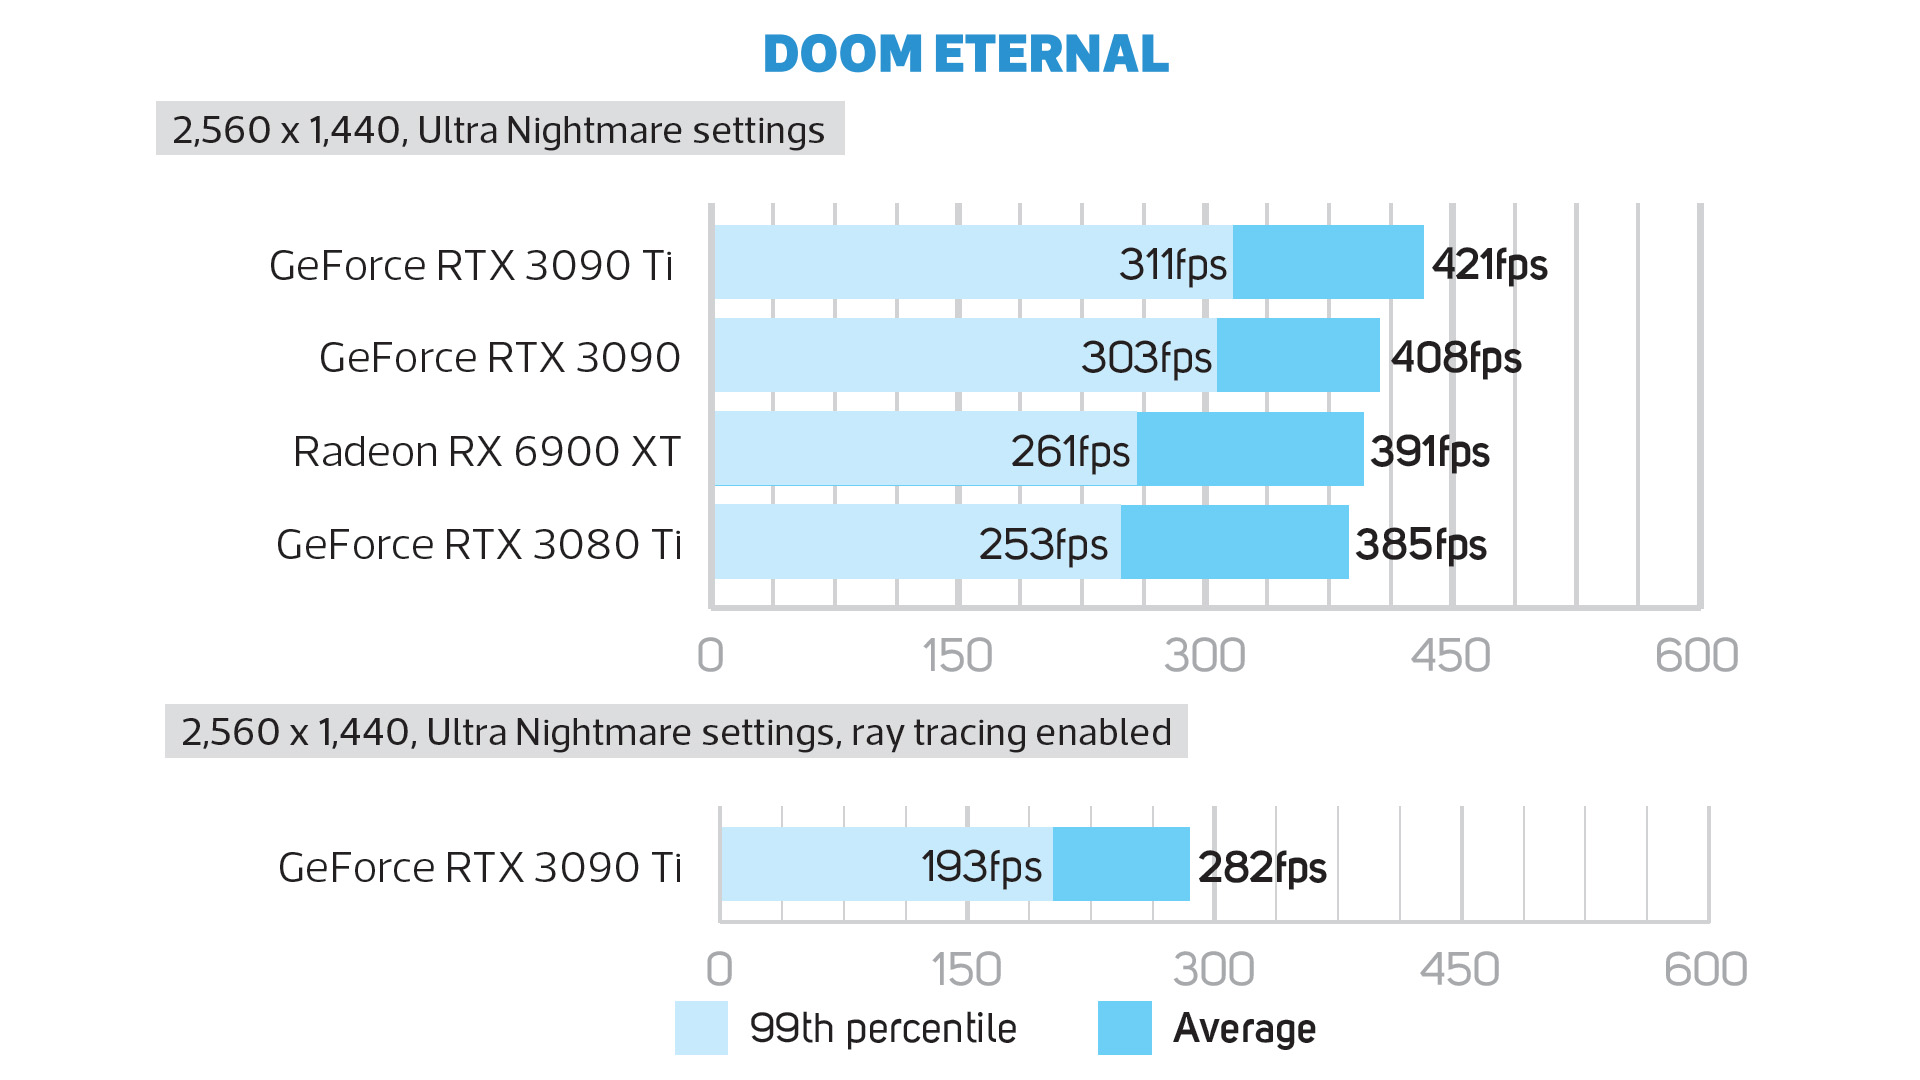 GeFoece RTX 3090 Ti Doom Eternal 1440p frame rate